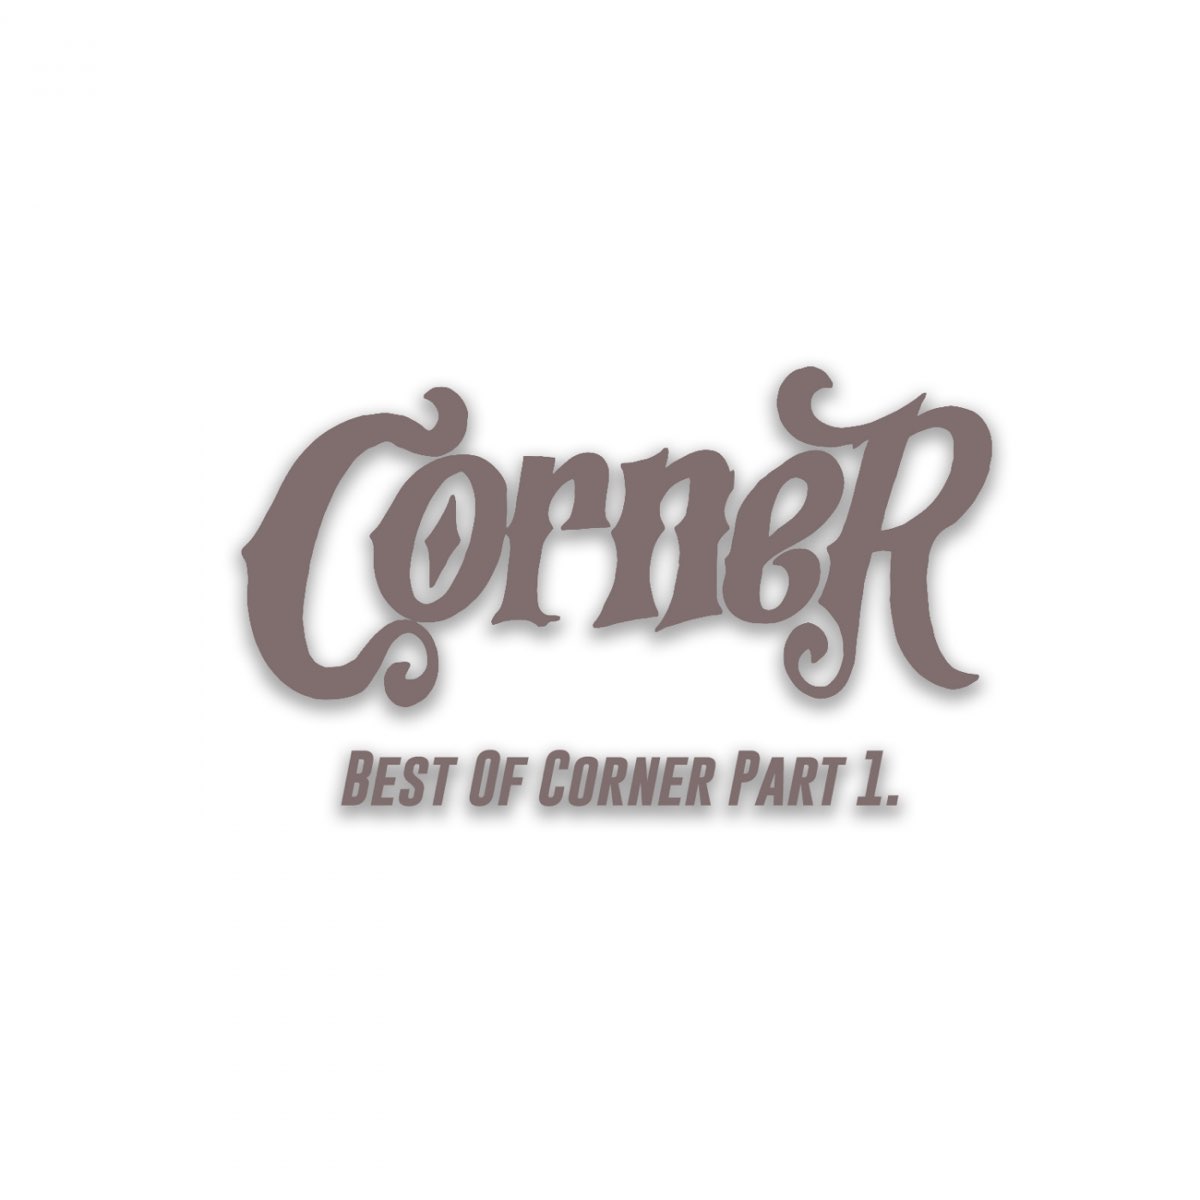 Last corner. Back to the Corner album.